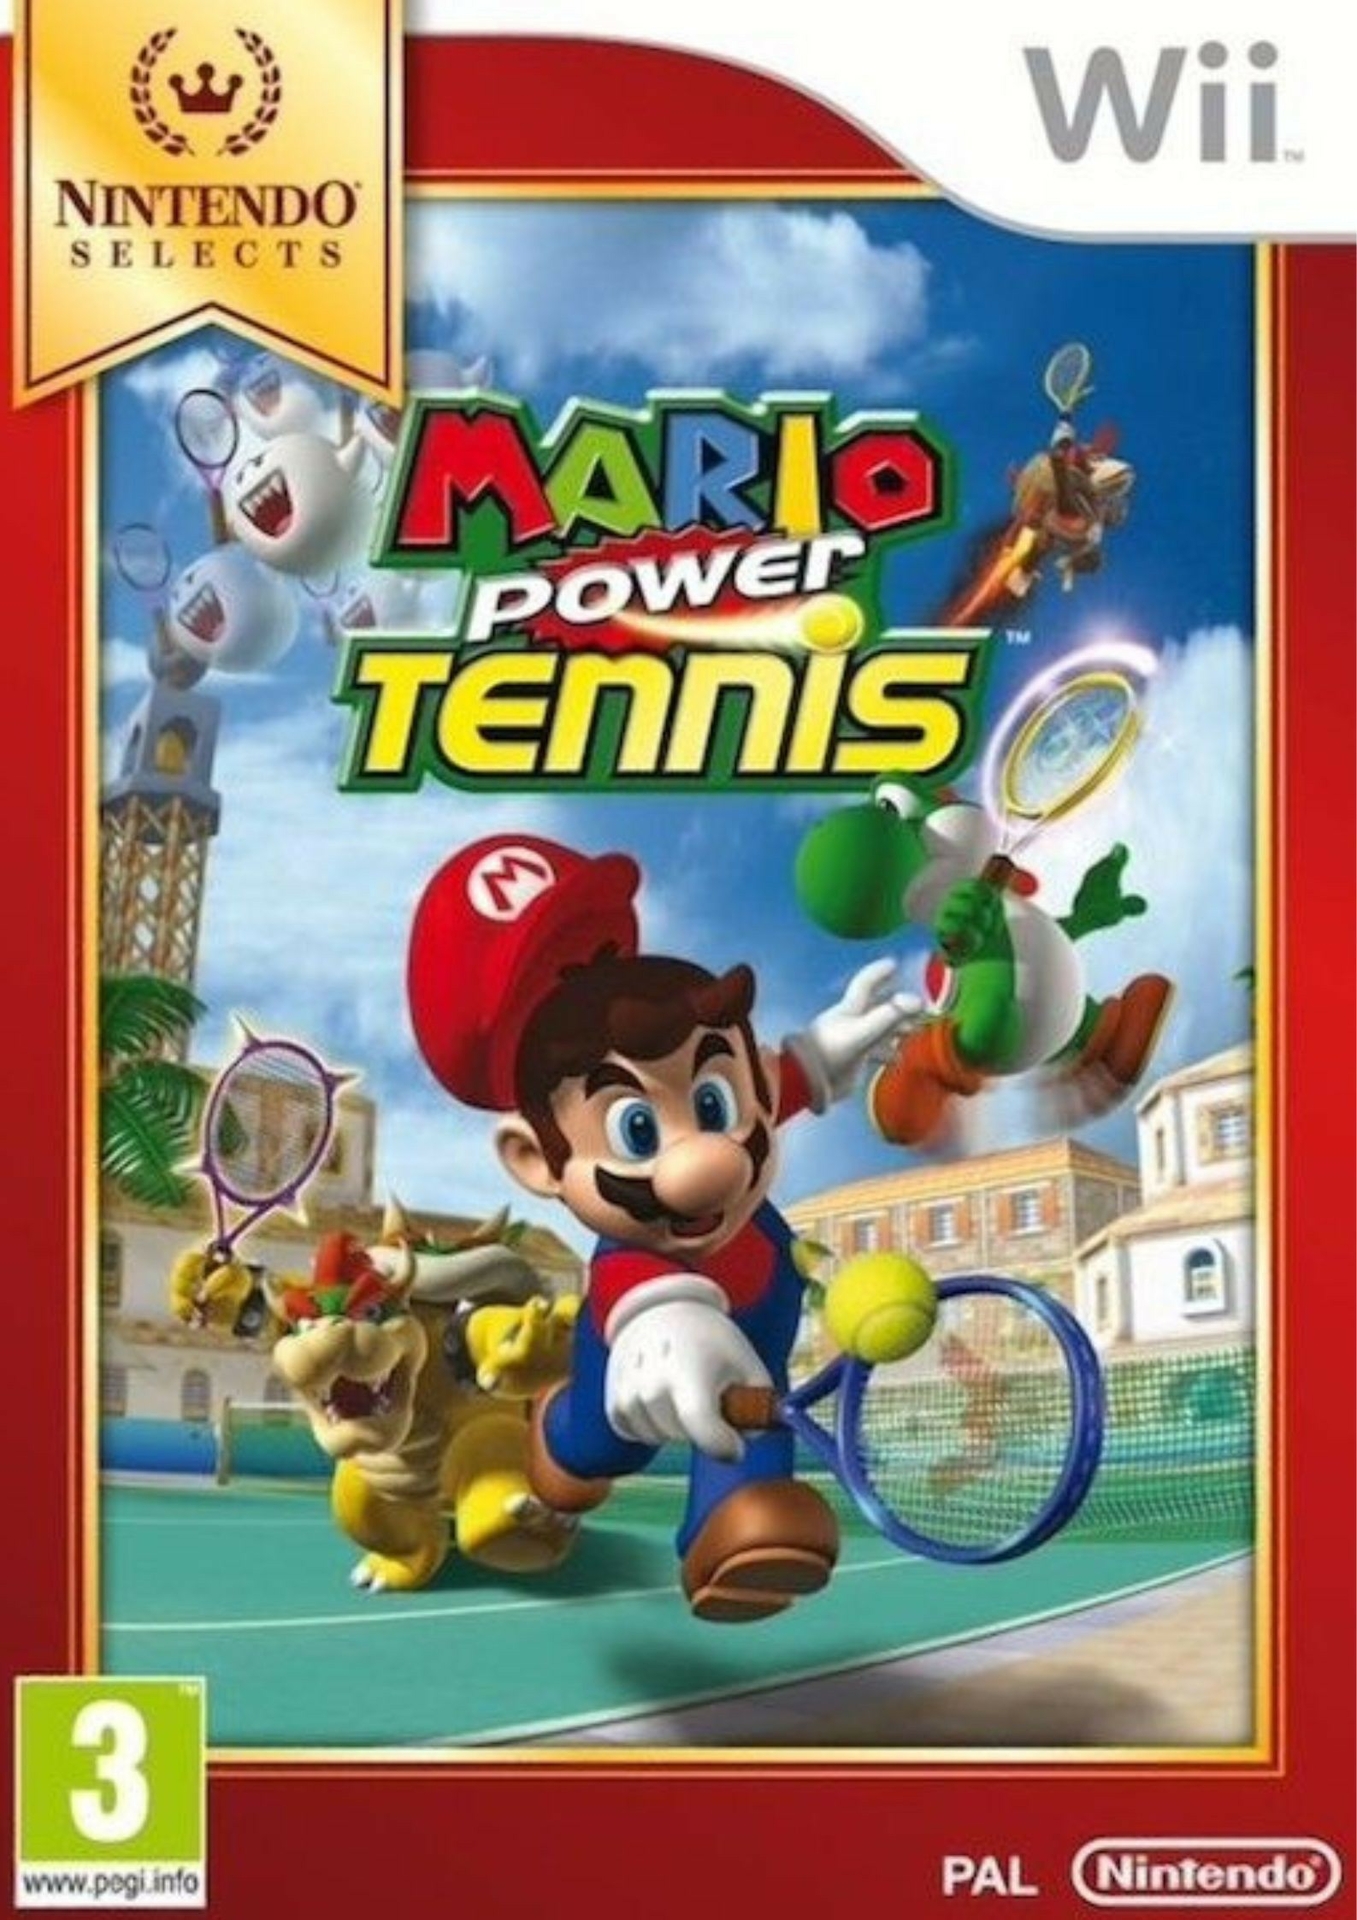 Mario Power Tennis (Nintendo Selects) - Wii Games